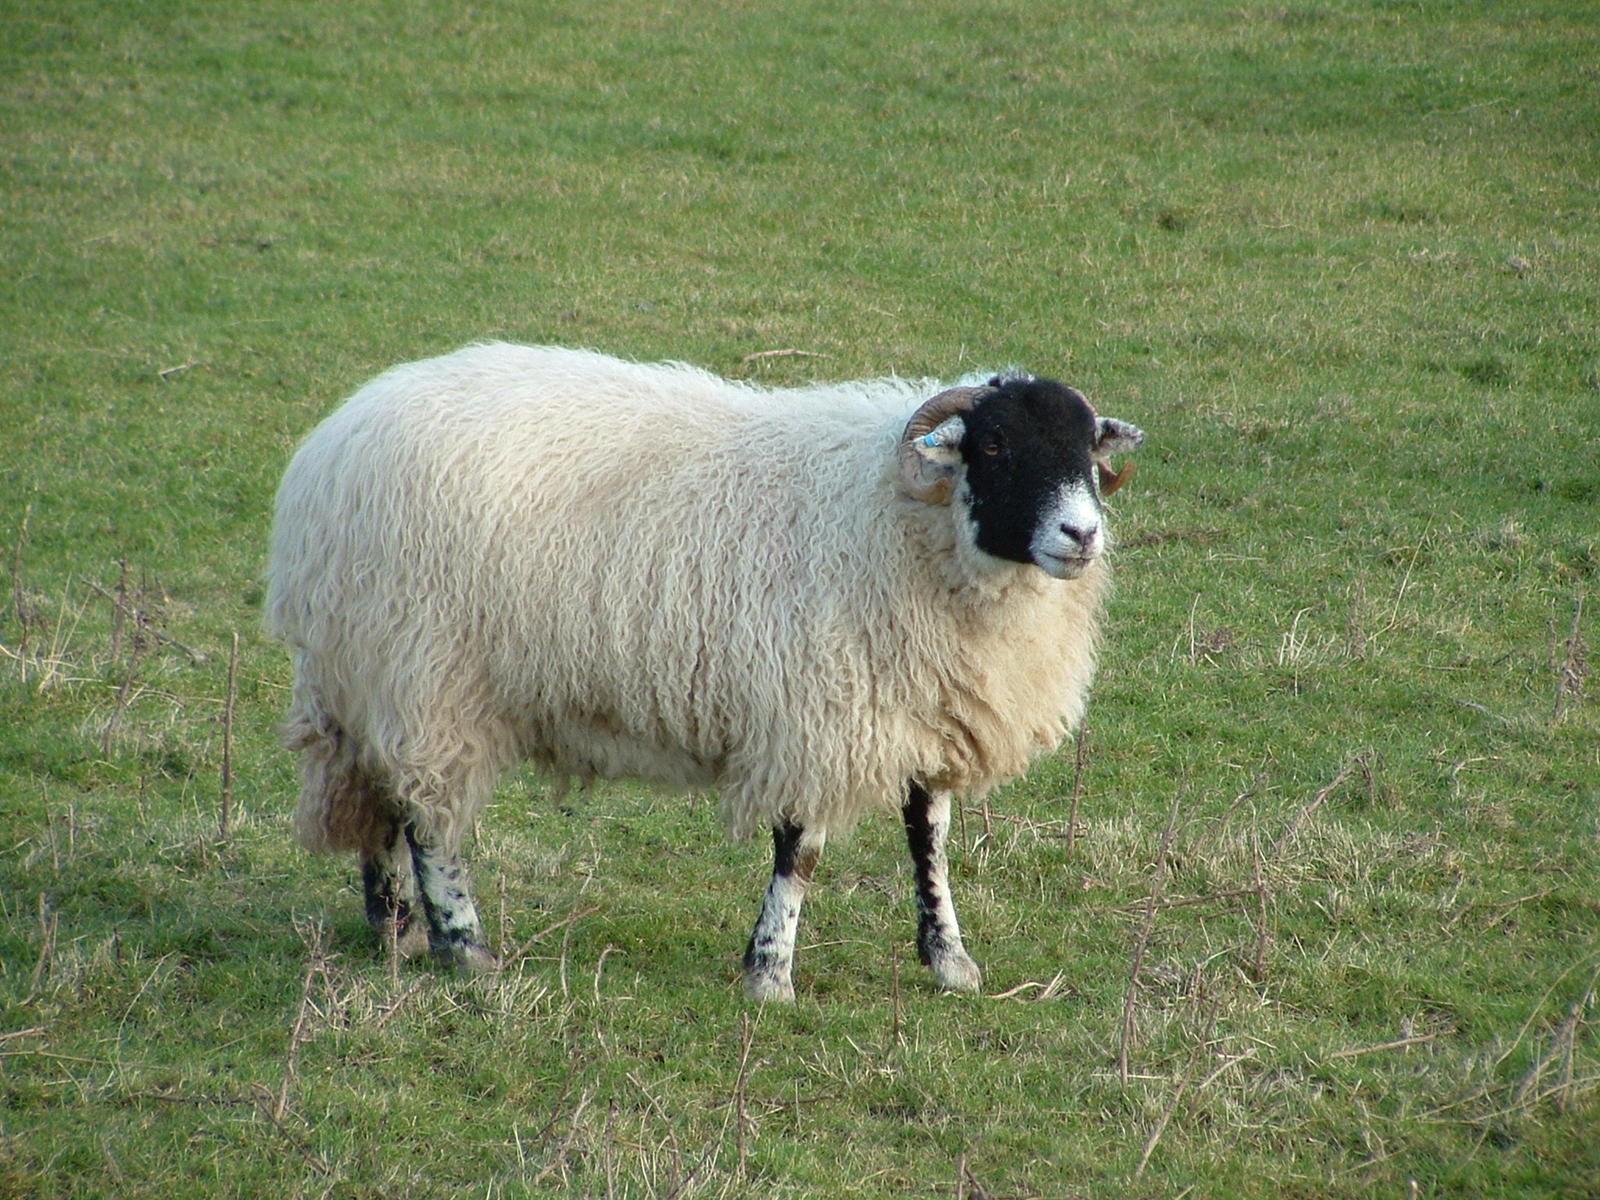 a sheep stands in an open field of grass